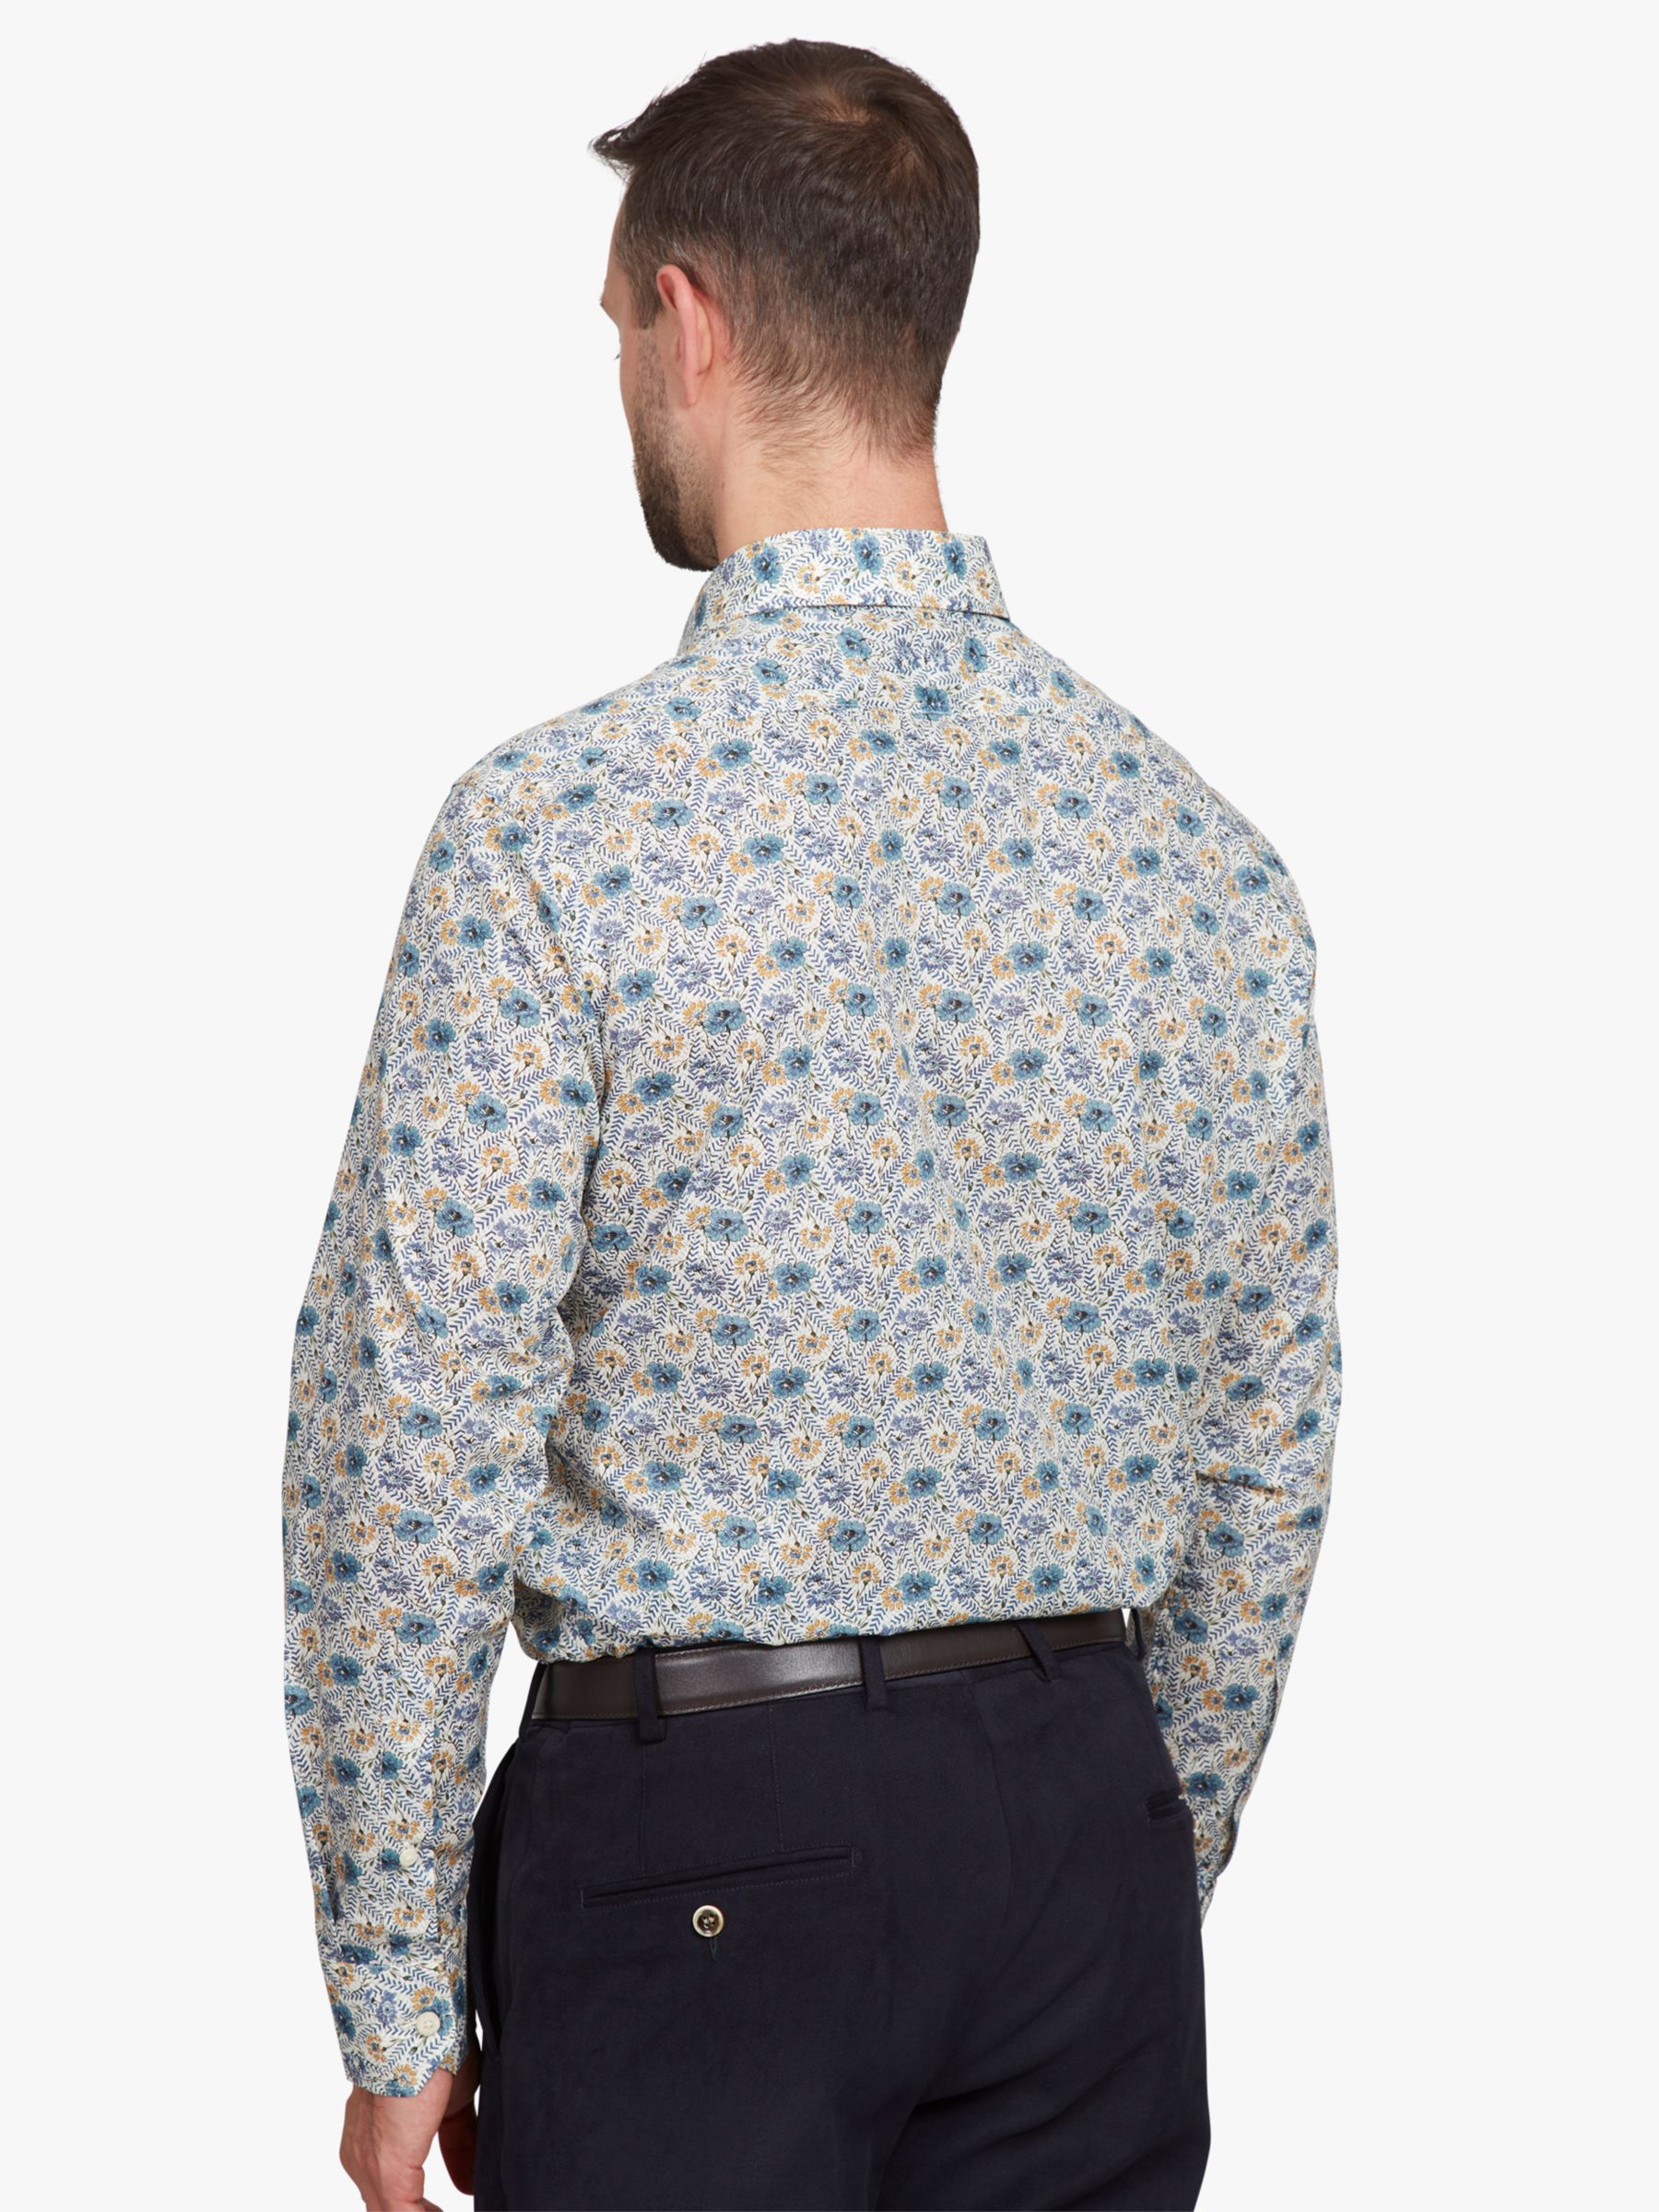 Buy Simon Carter Demeter Shirt, Blue/Multi Online at johnlewis.com